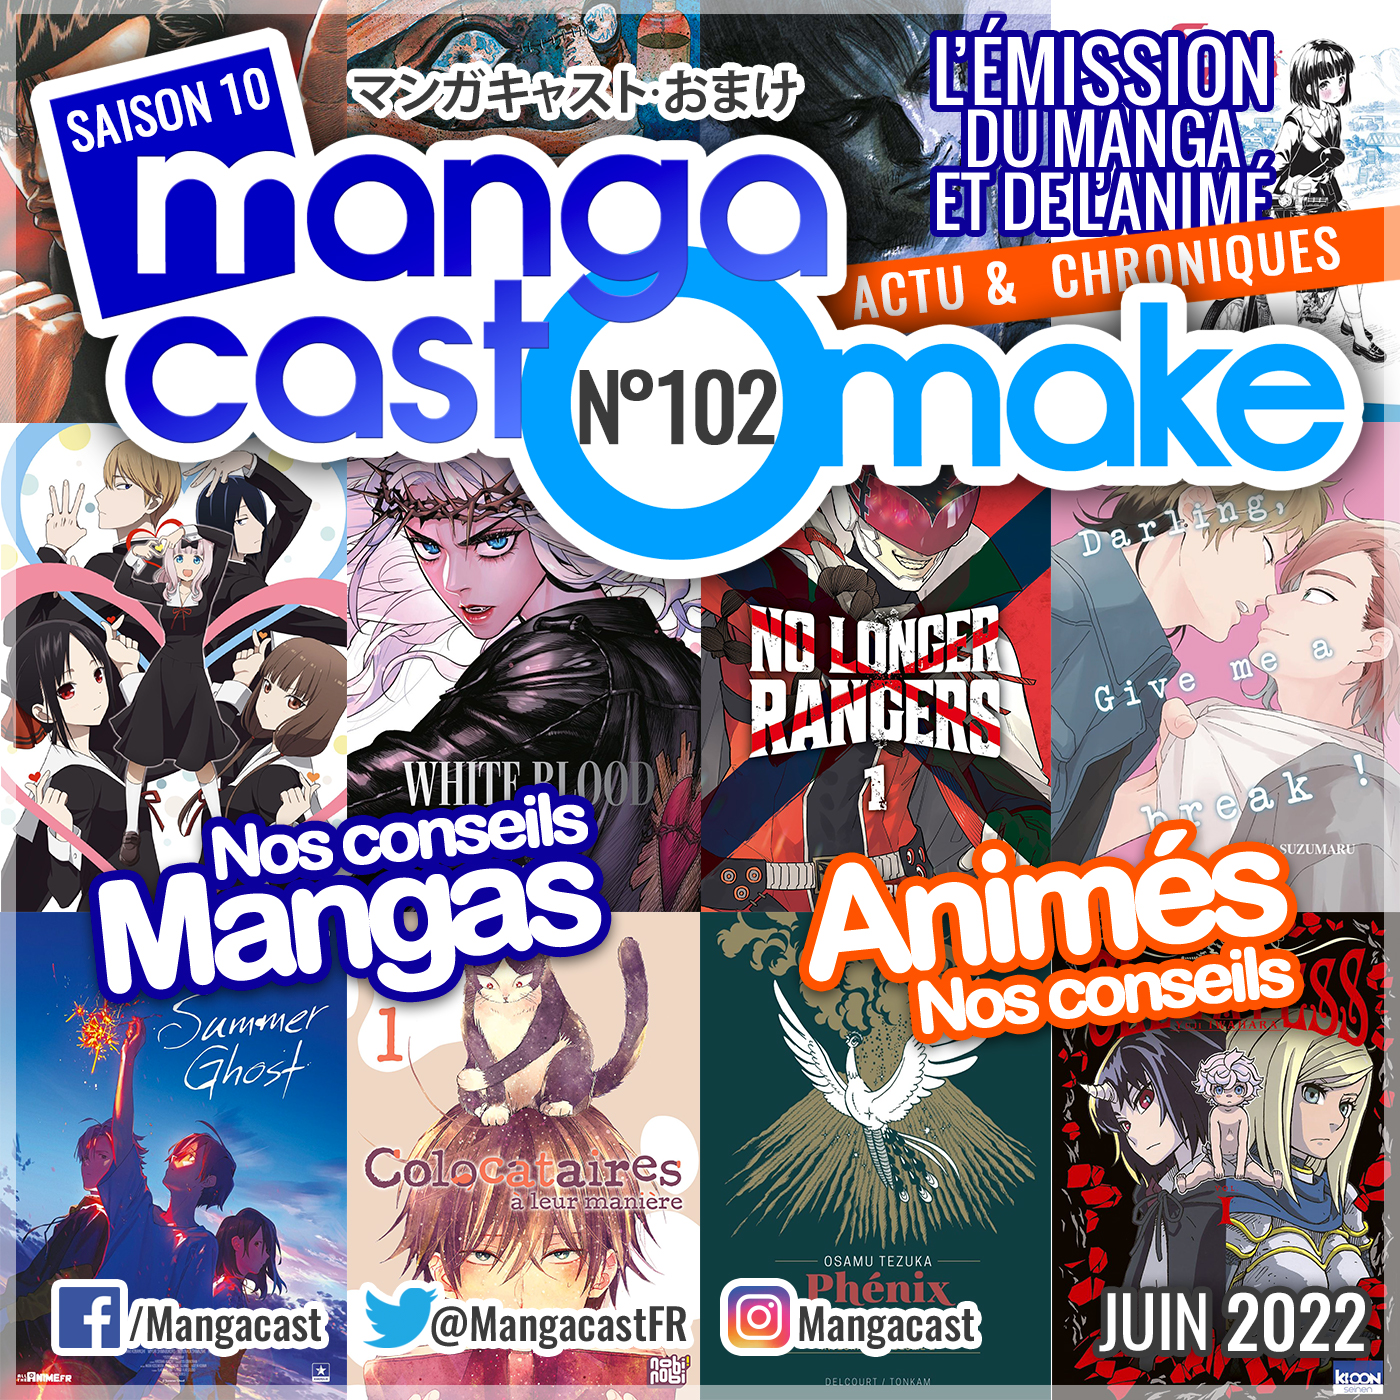 Cartouche du Mangacast Omake n°102